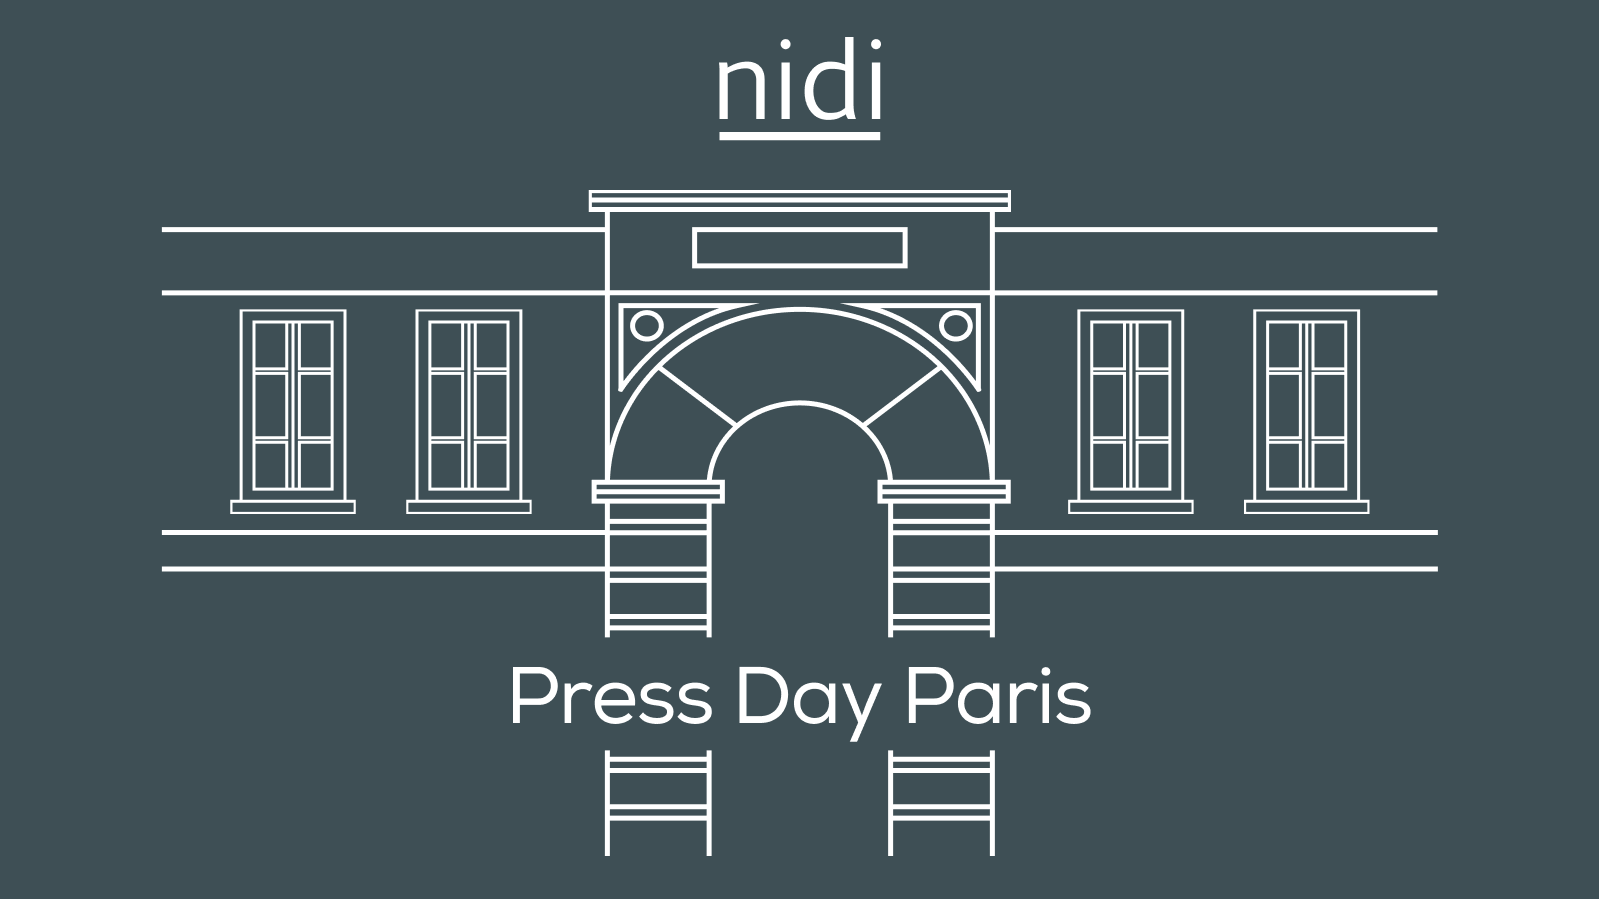 Press Day Paris